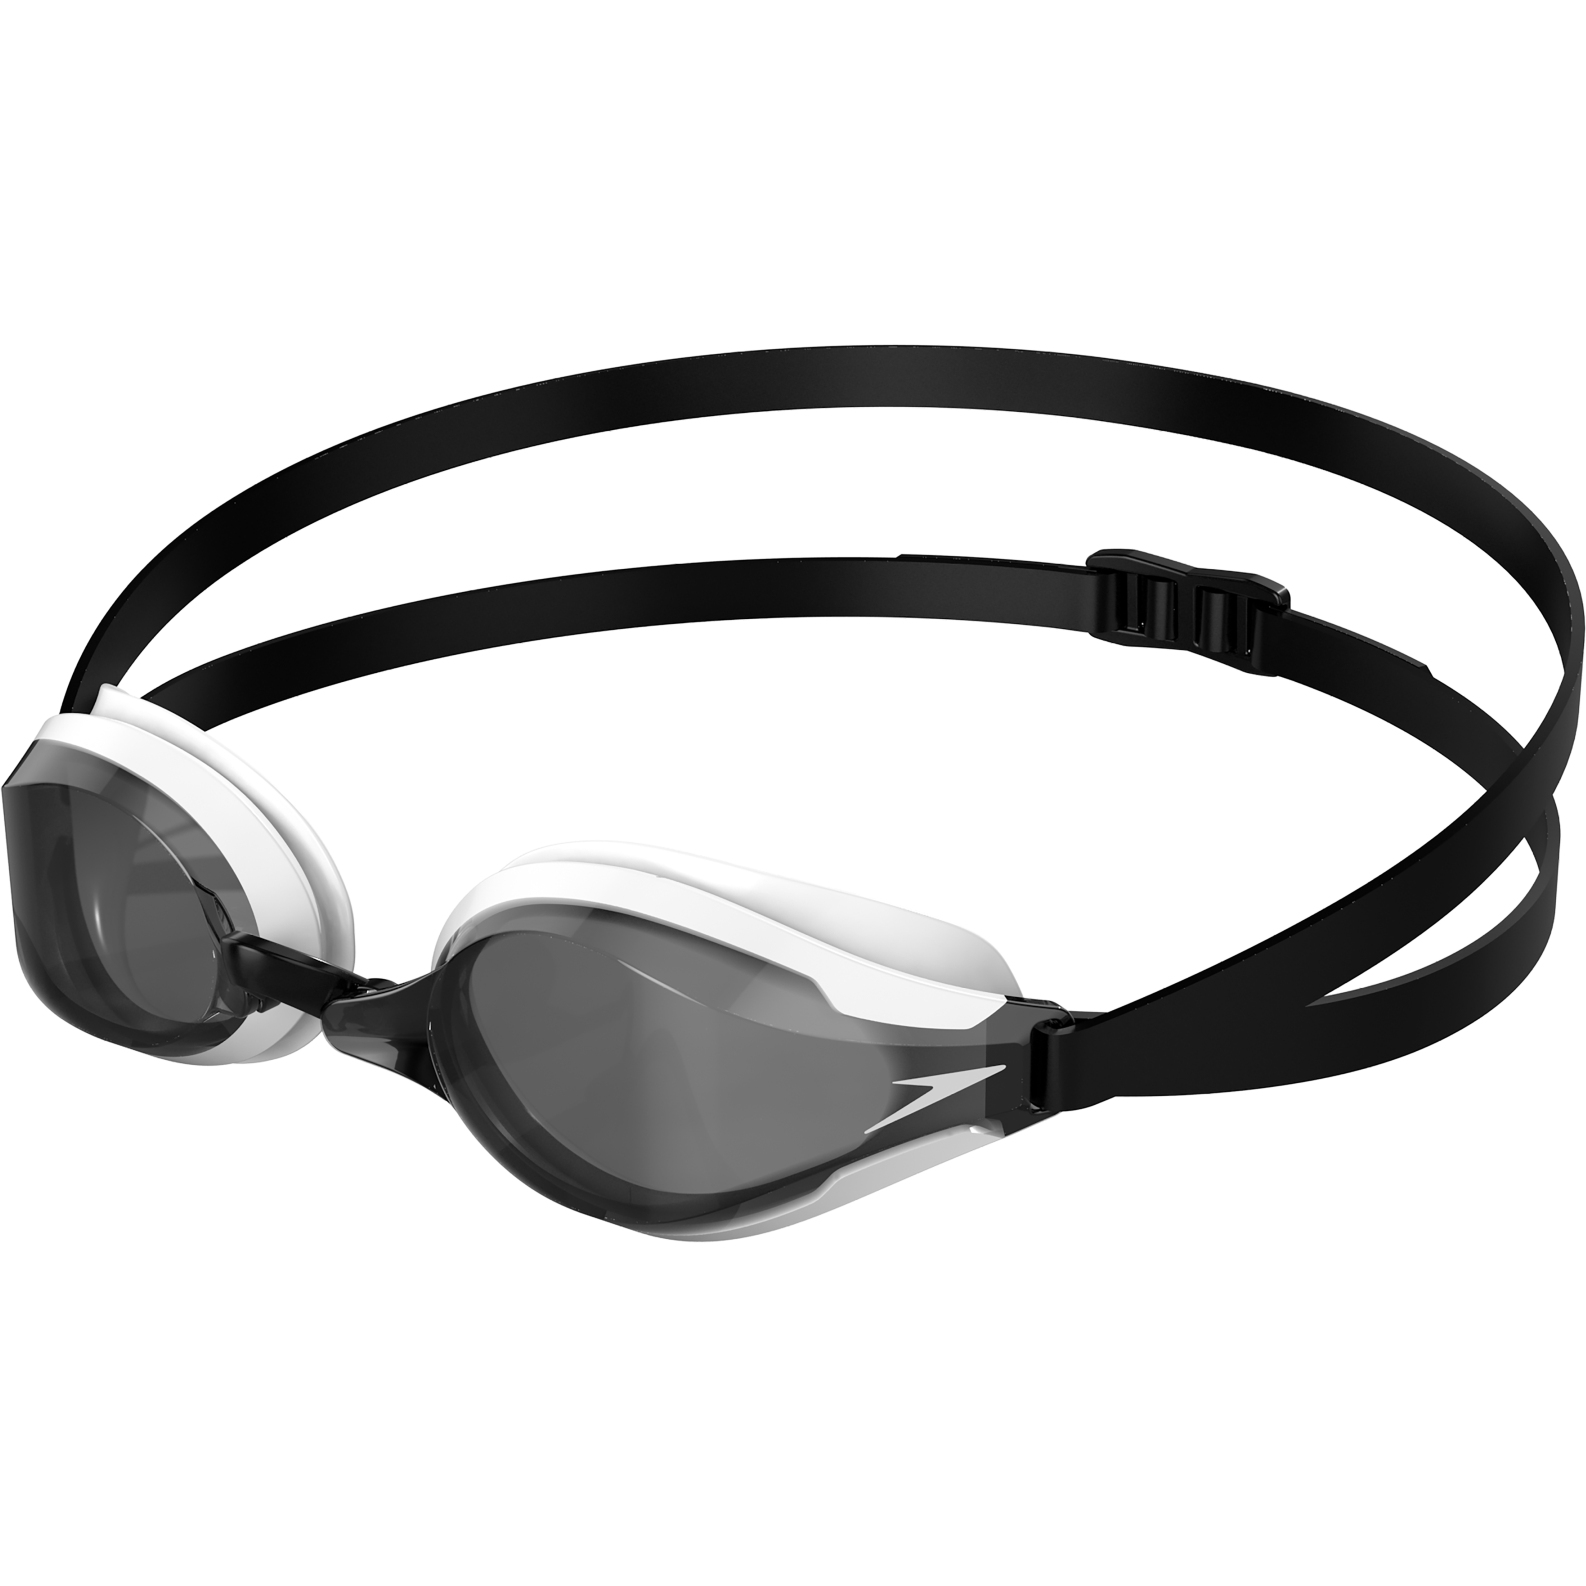 Picture of Speedo Fastskin Speedsocket 2 Swimming Goggle - Black/White/Smoke